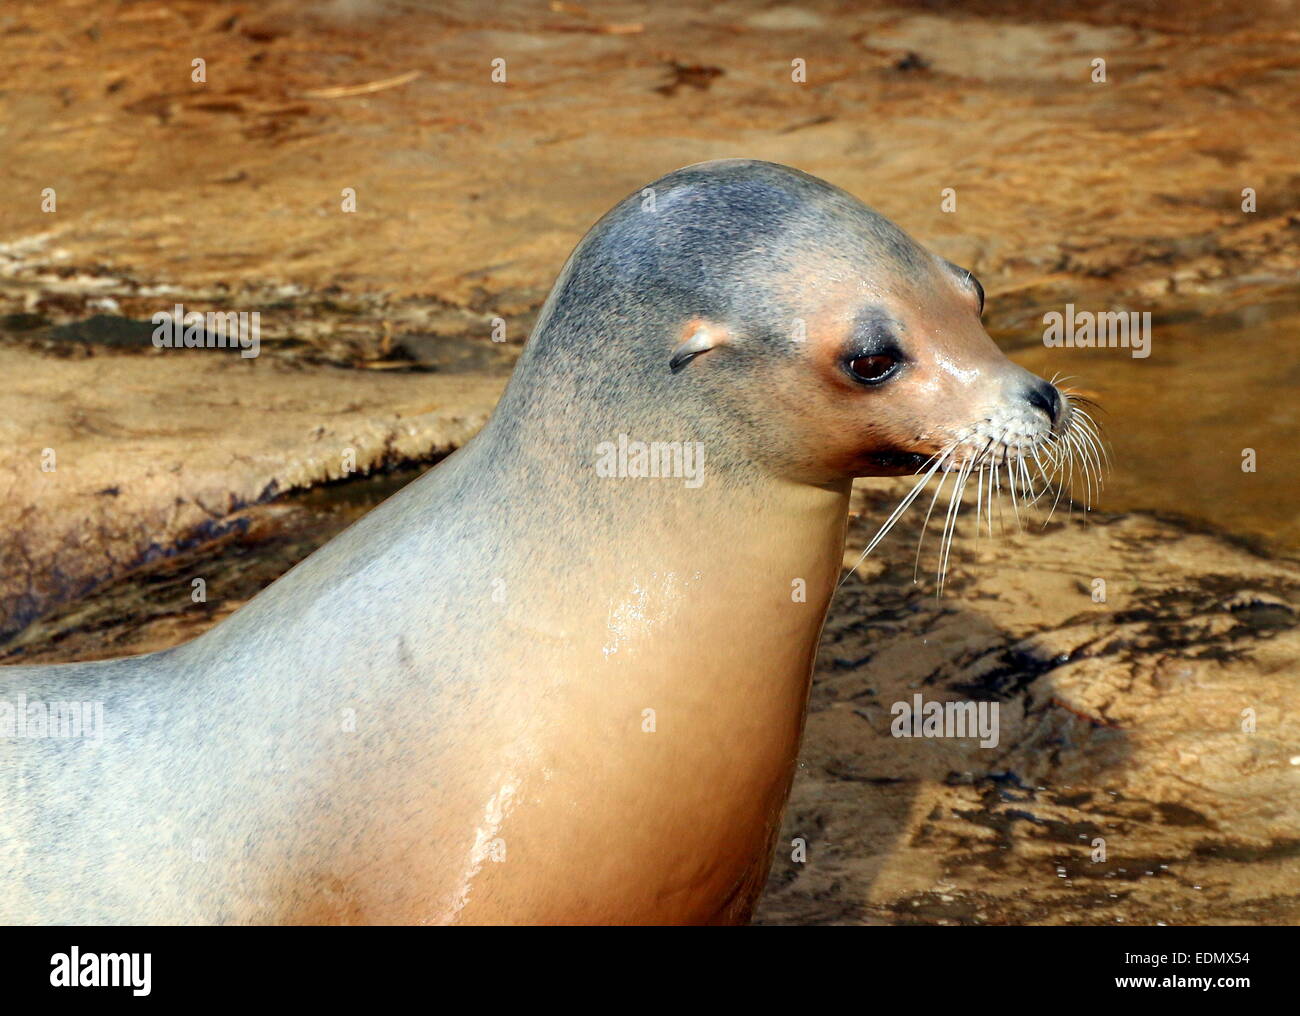 Female California sea lion (Zalophus californianus) in close-up Stock Photo